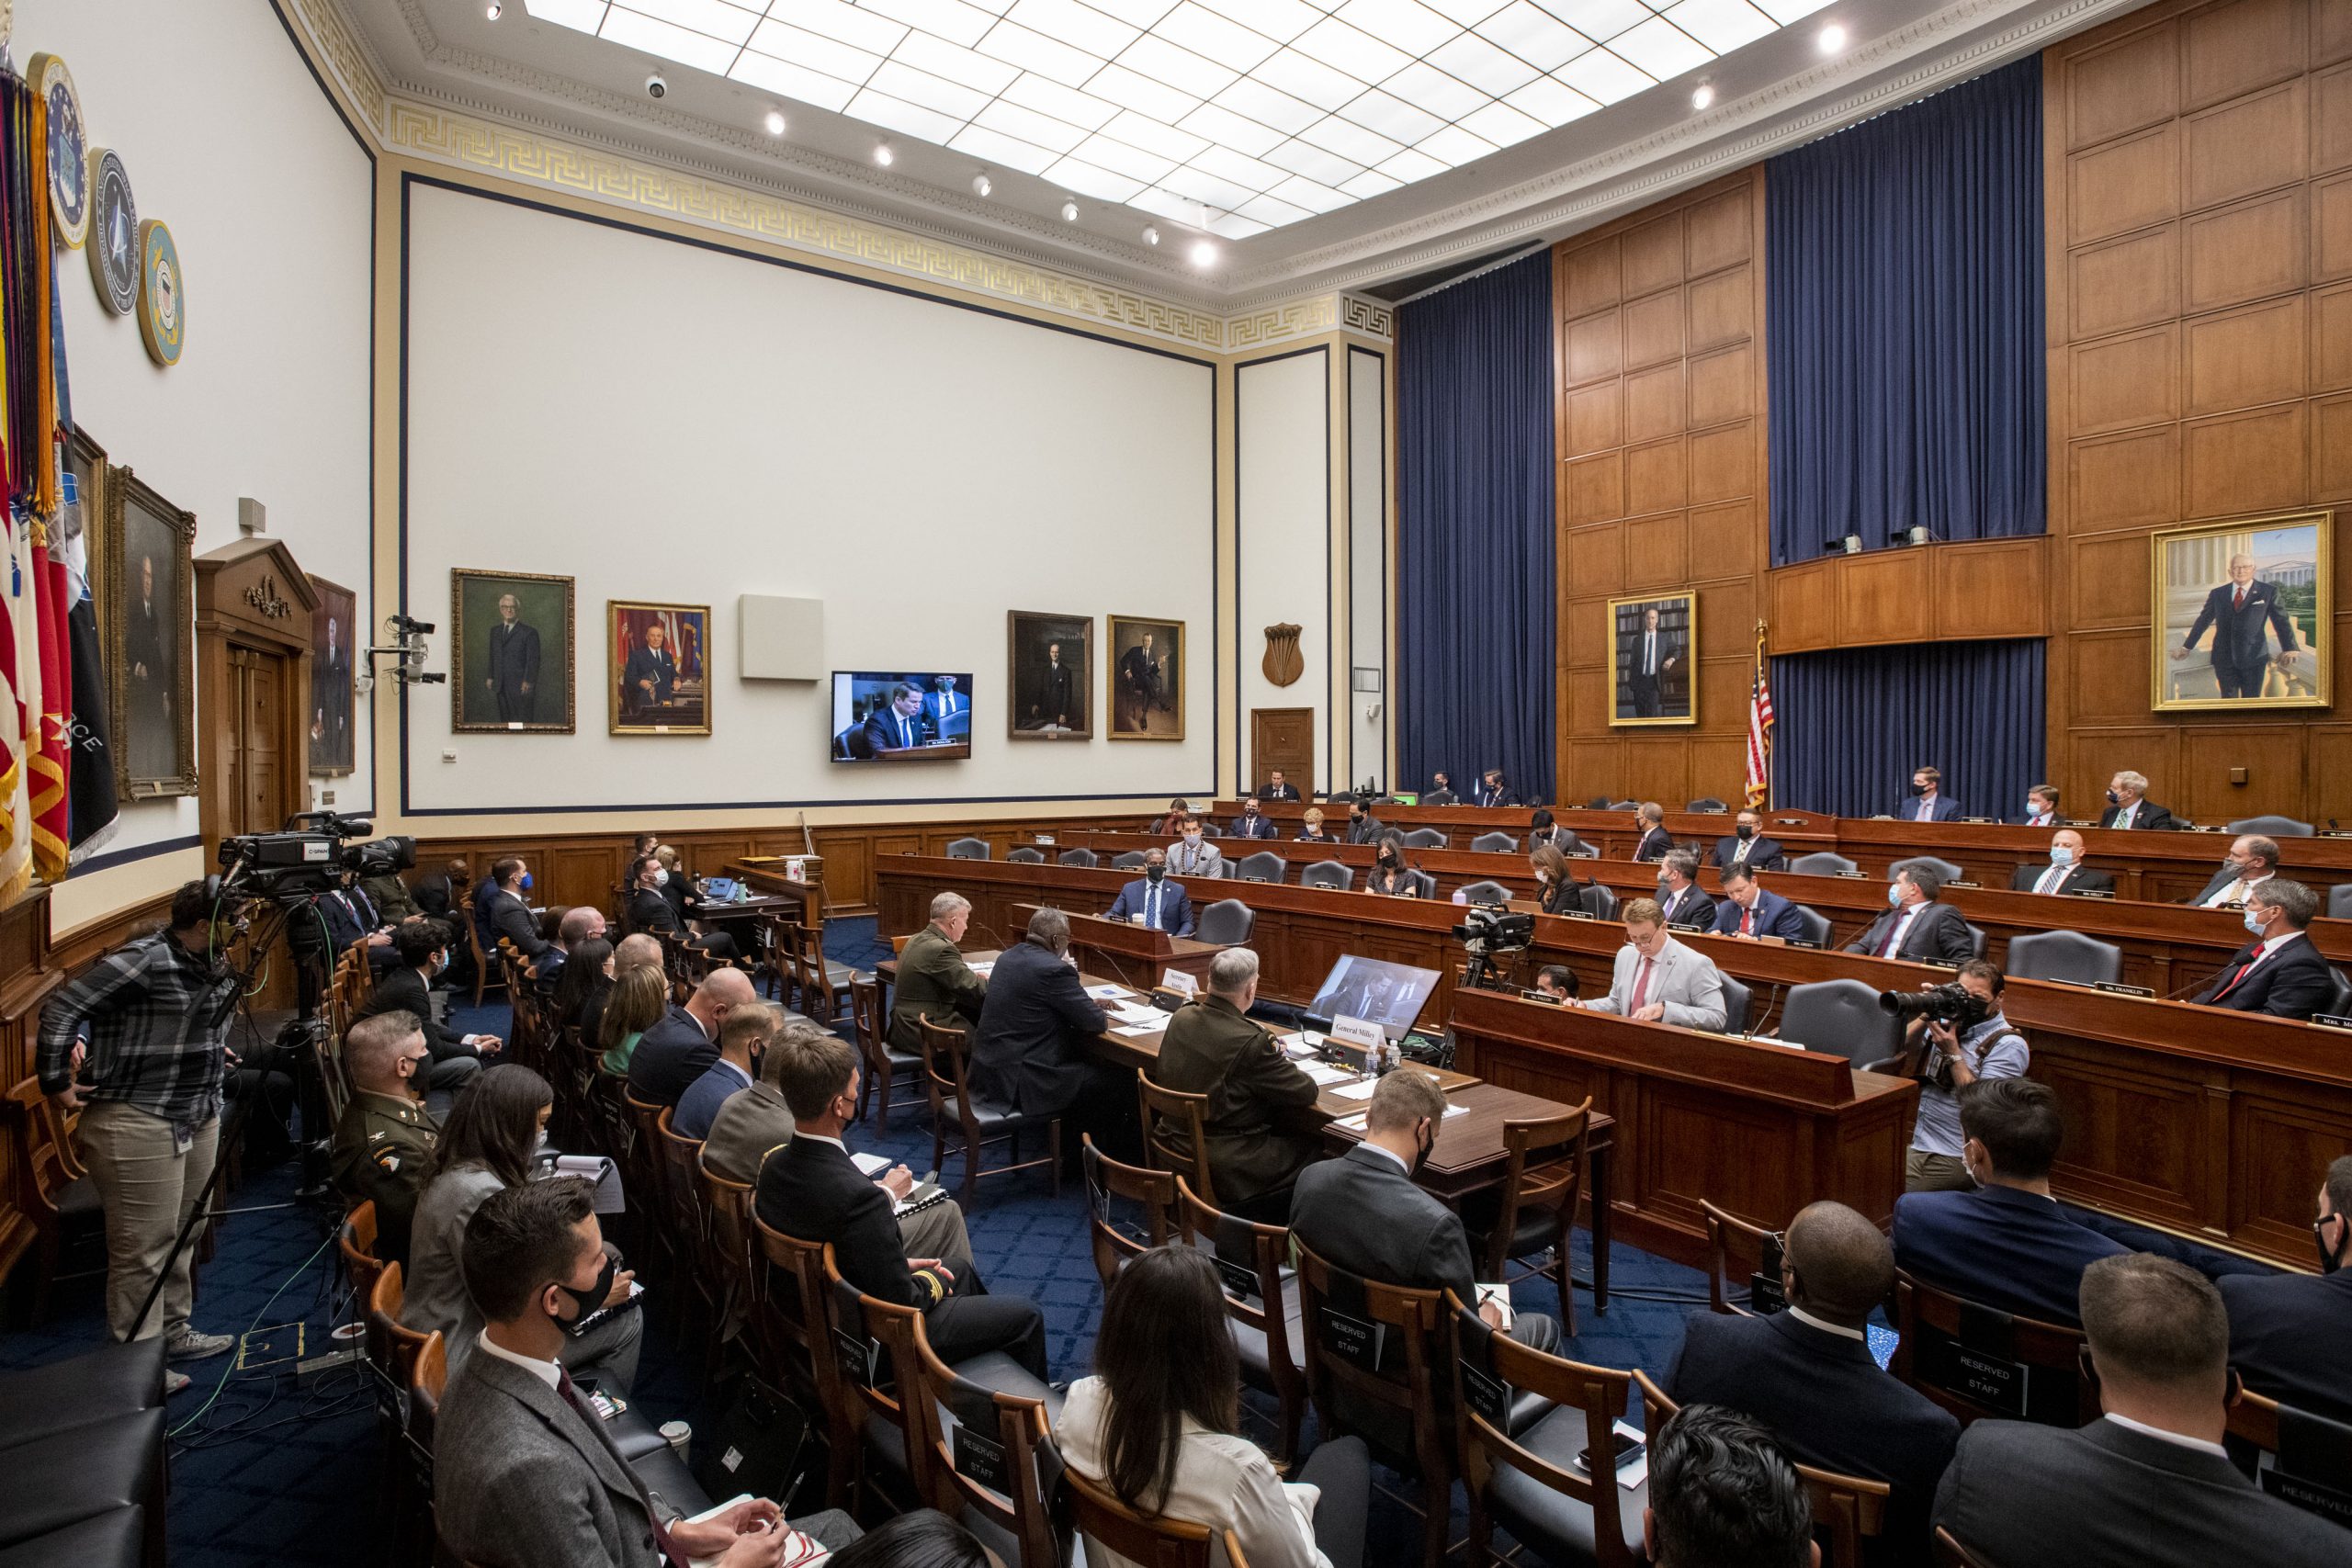 US Senate hearing on Afghanistan crisis: Key highlights